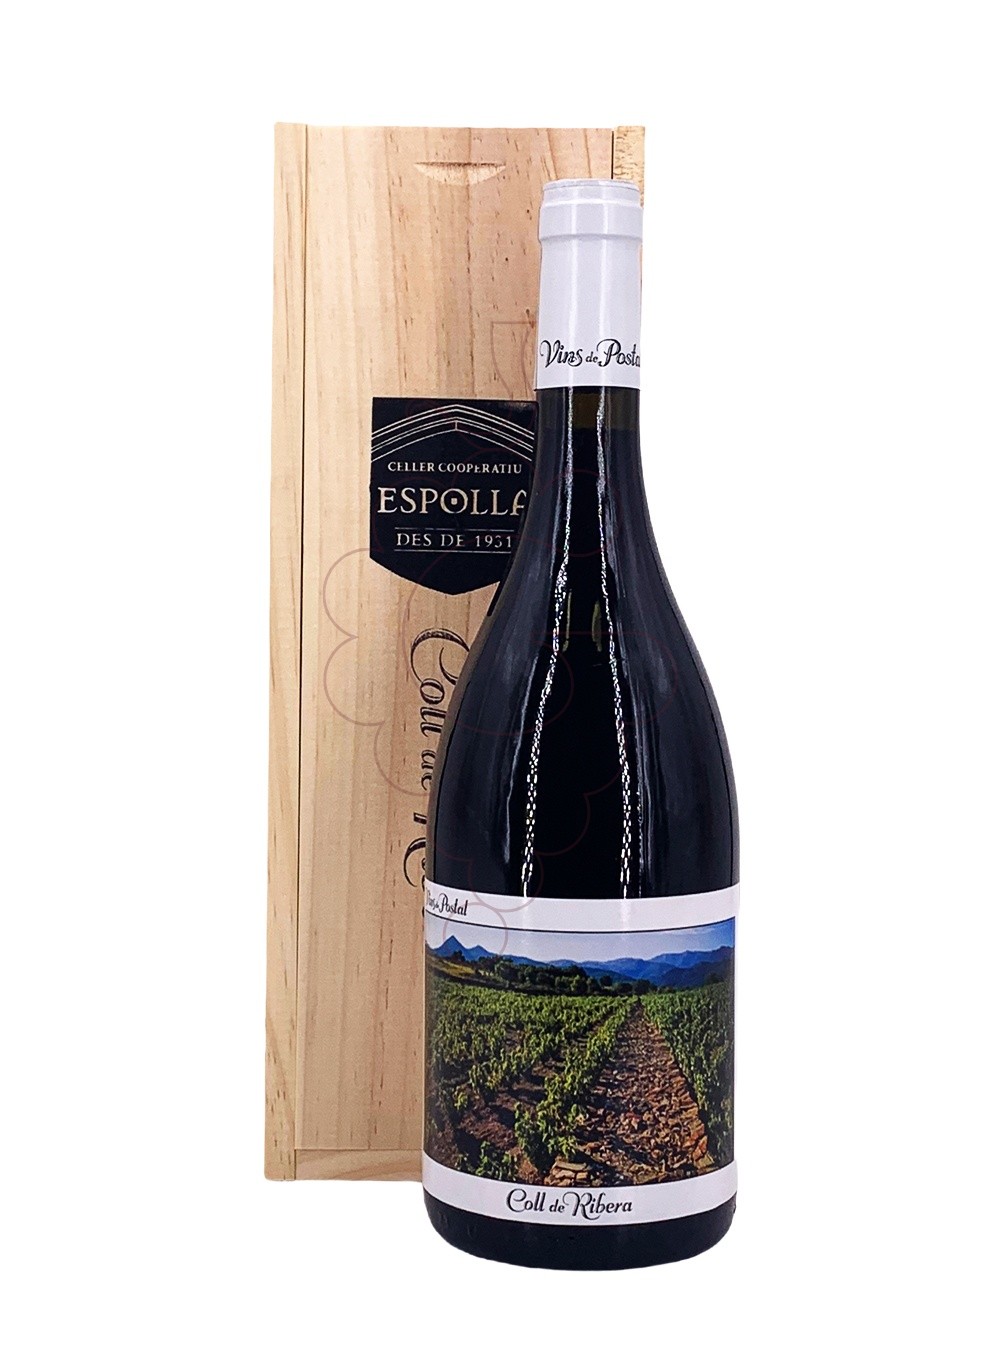 Photo Coll de Ribera Vins de Postal Espolla red wine